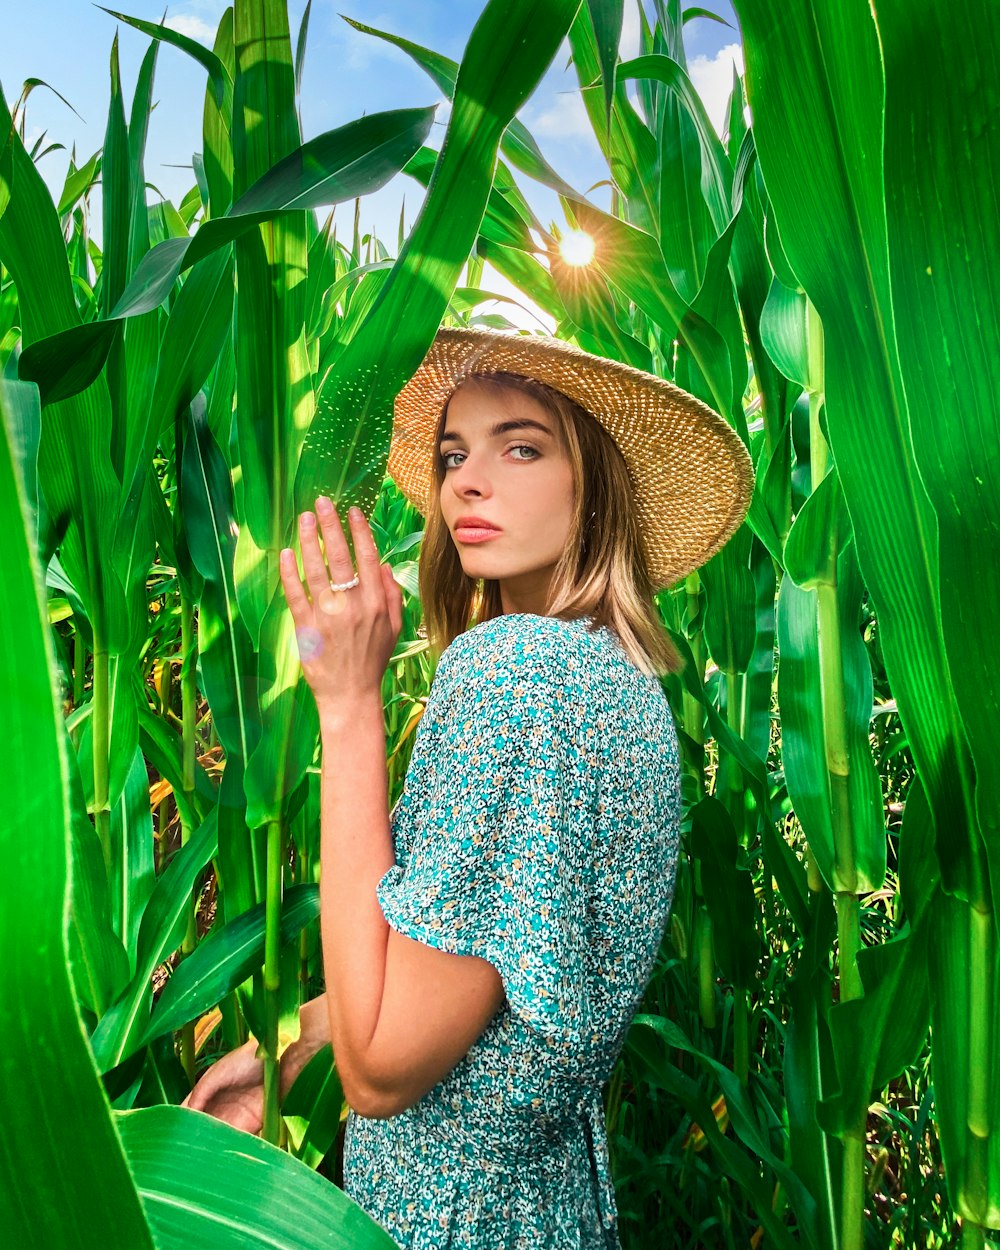 a woman wearing a straw hat standing in a corn field